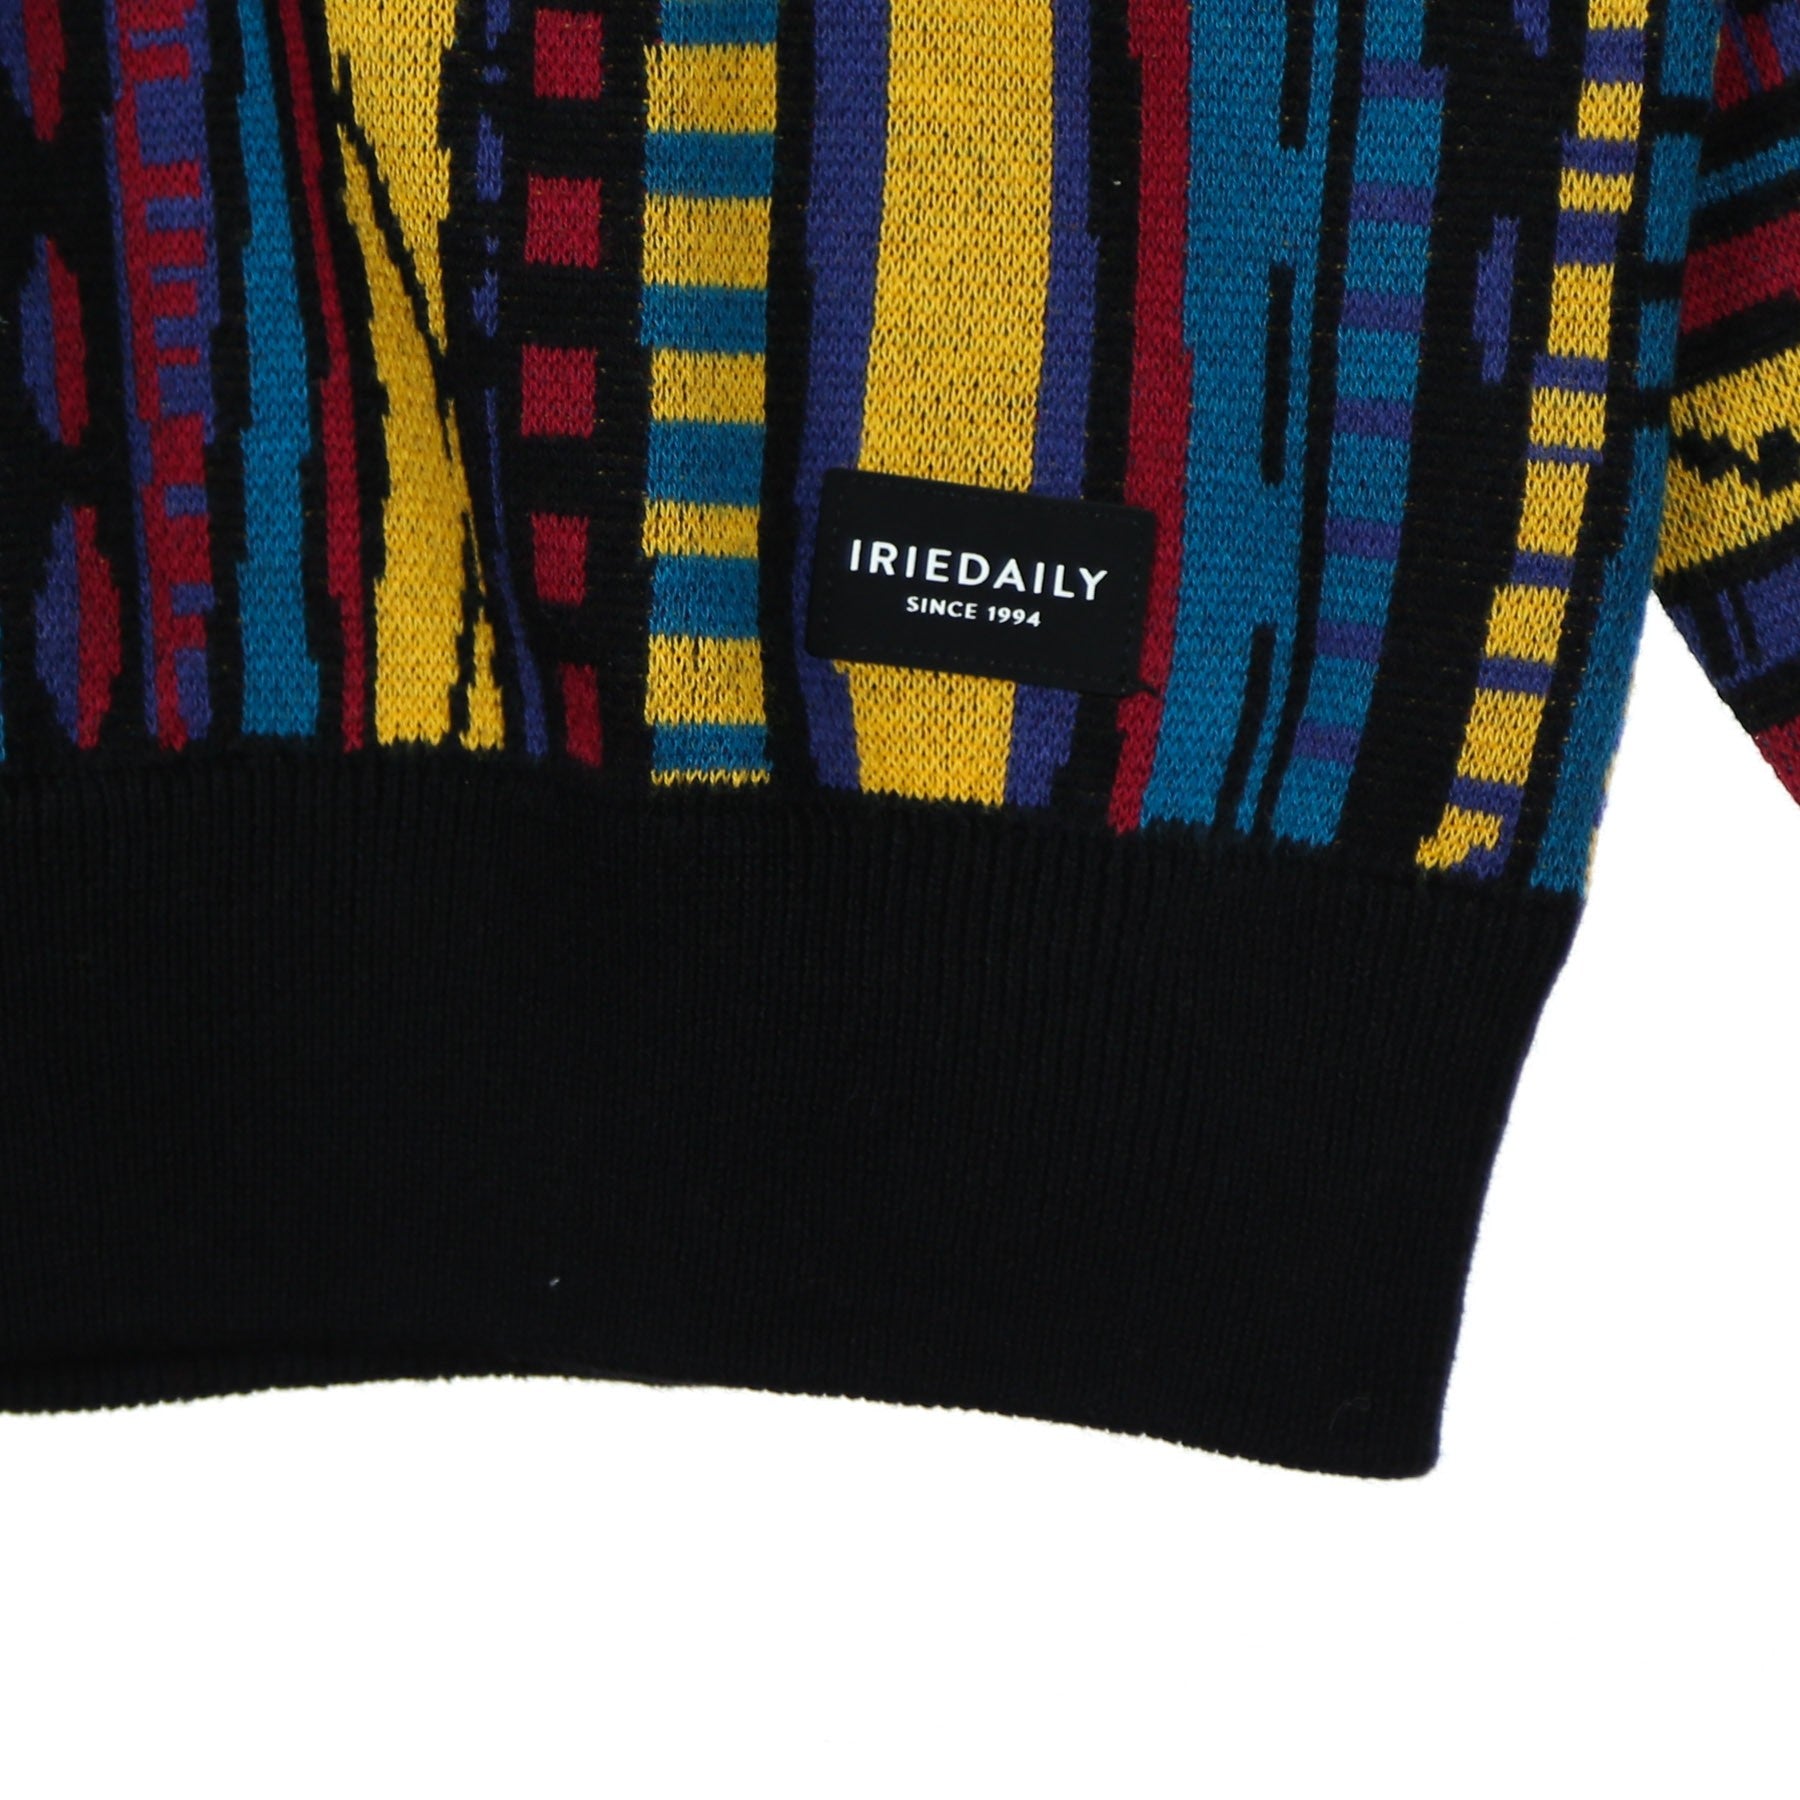 Theodore Knit Men's Lightweight Sweater Multi